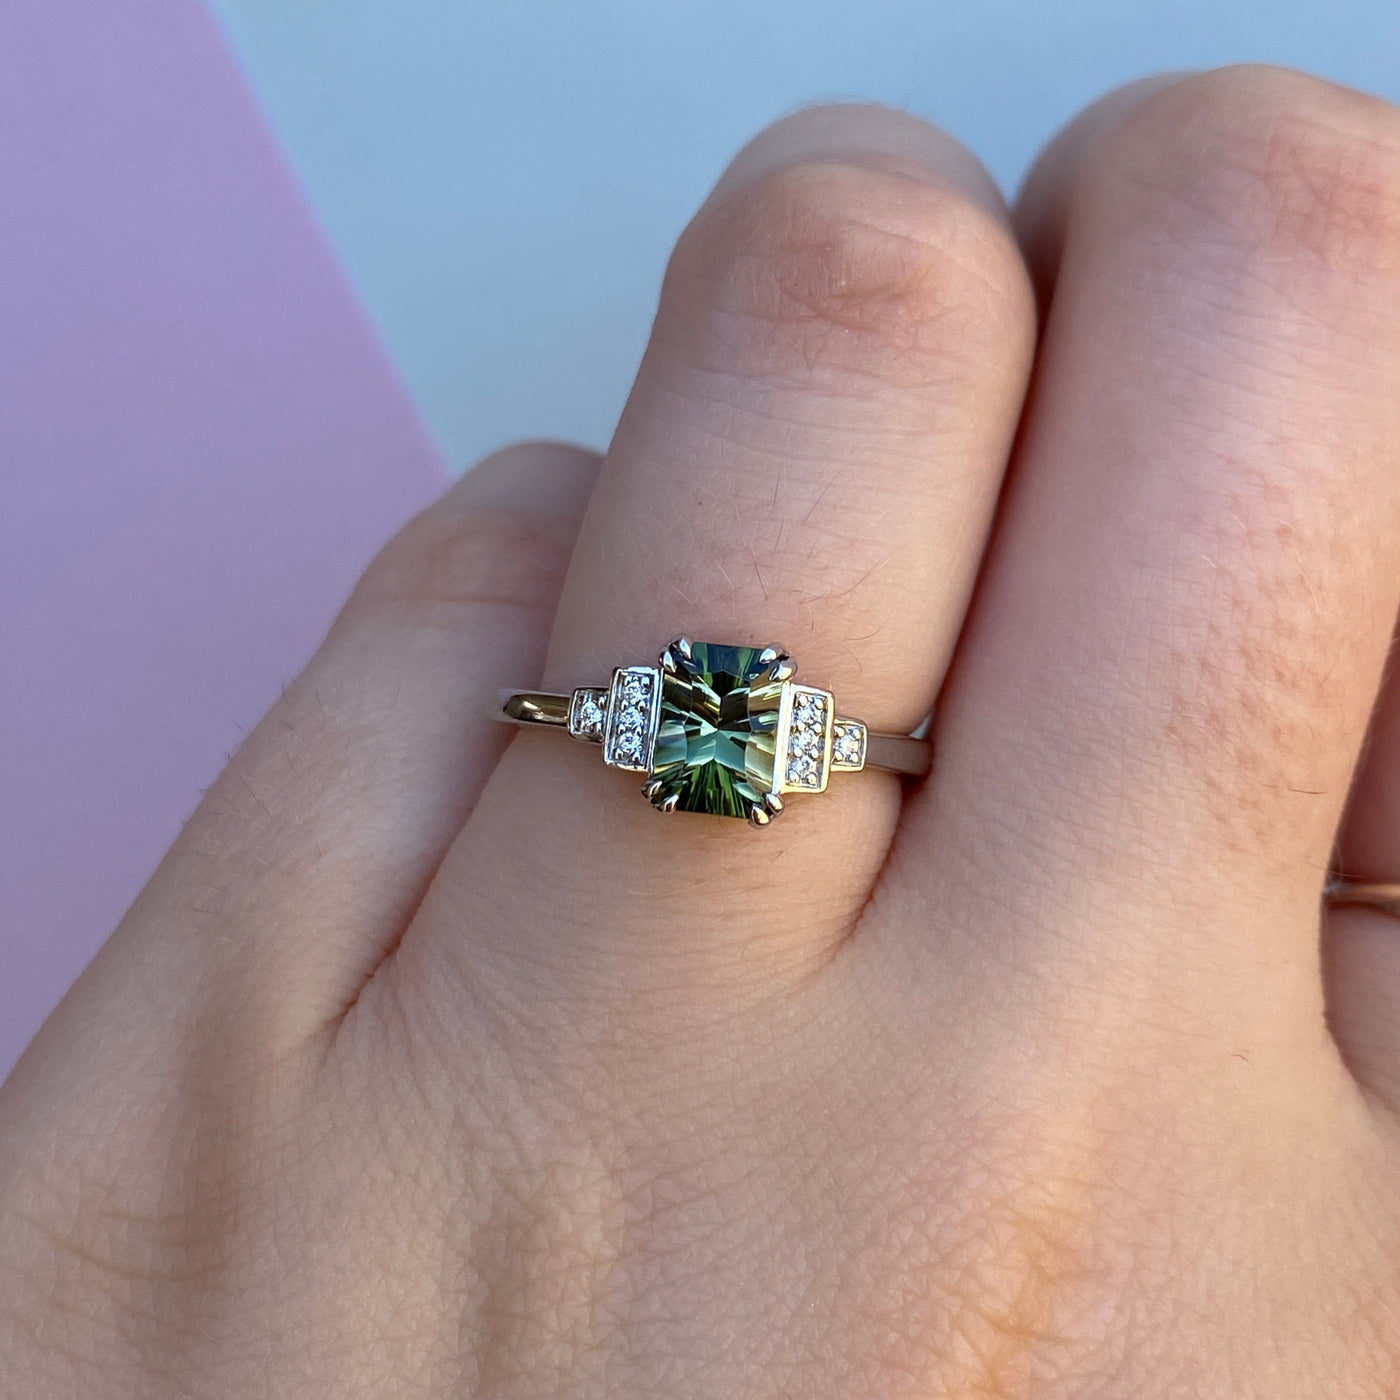 Grace - Optix Emerald Cut Green Tourmaline Engagement Ring with Diamond Bars - Custom Made-to-Order Design